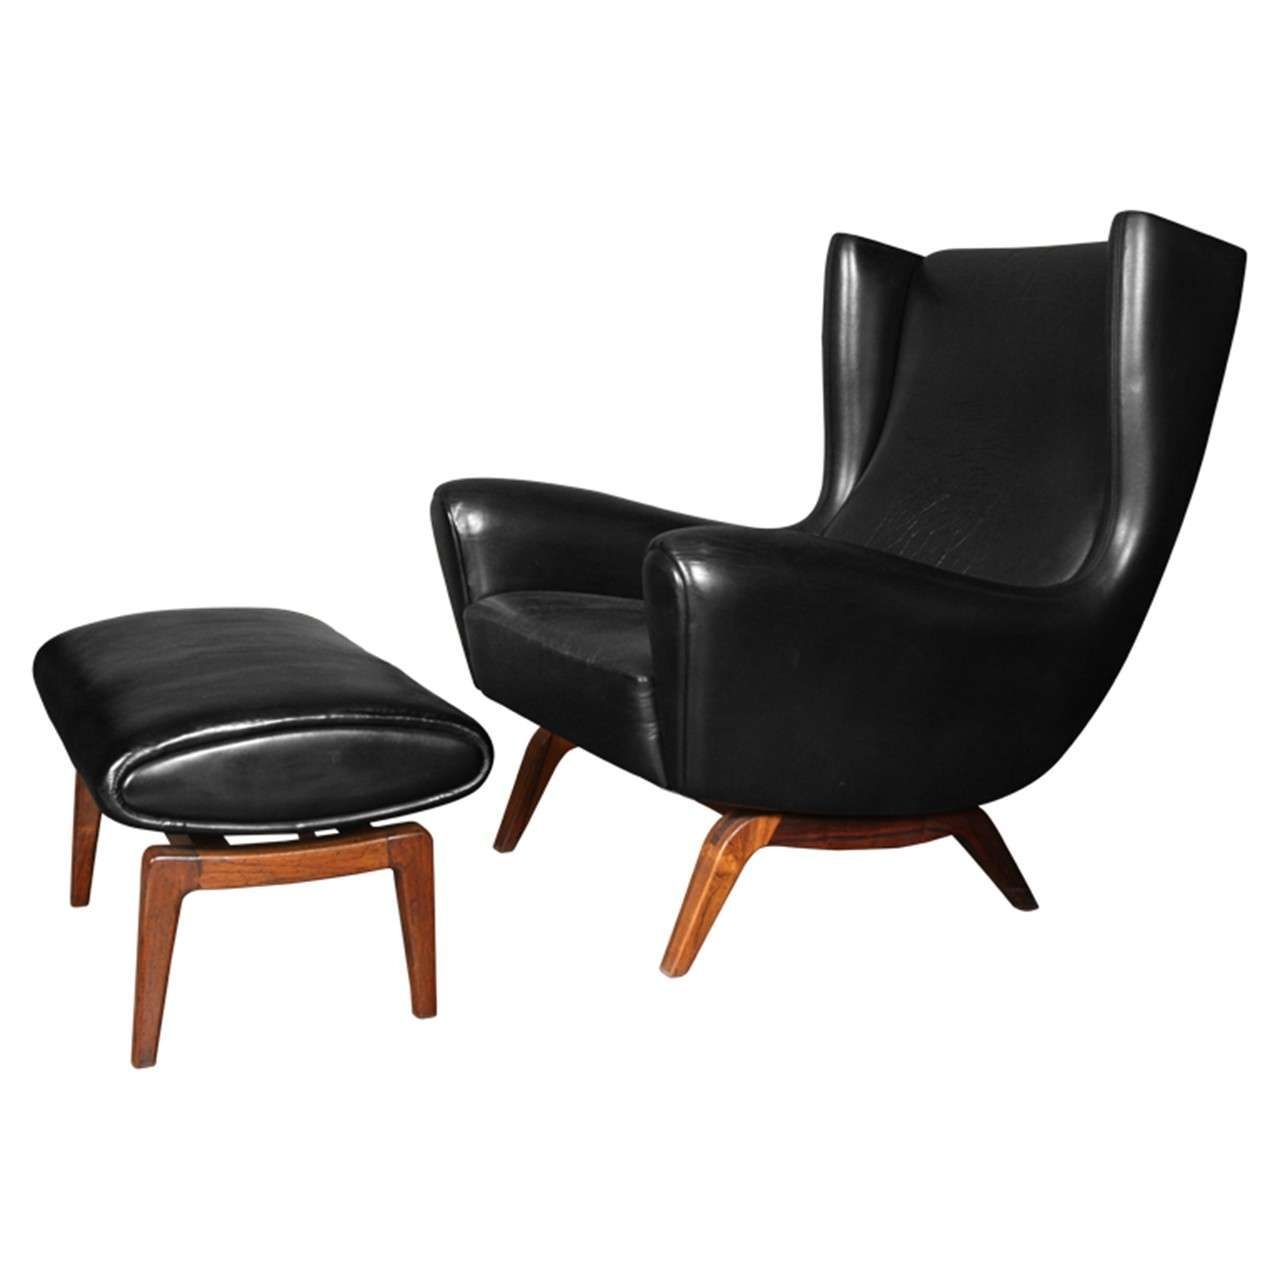 Illum wikkels model 110 black leather chair ottoman